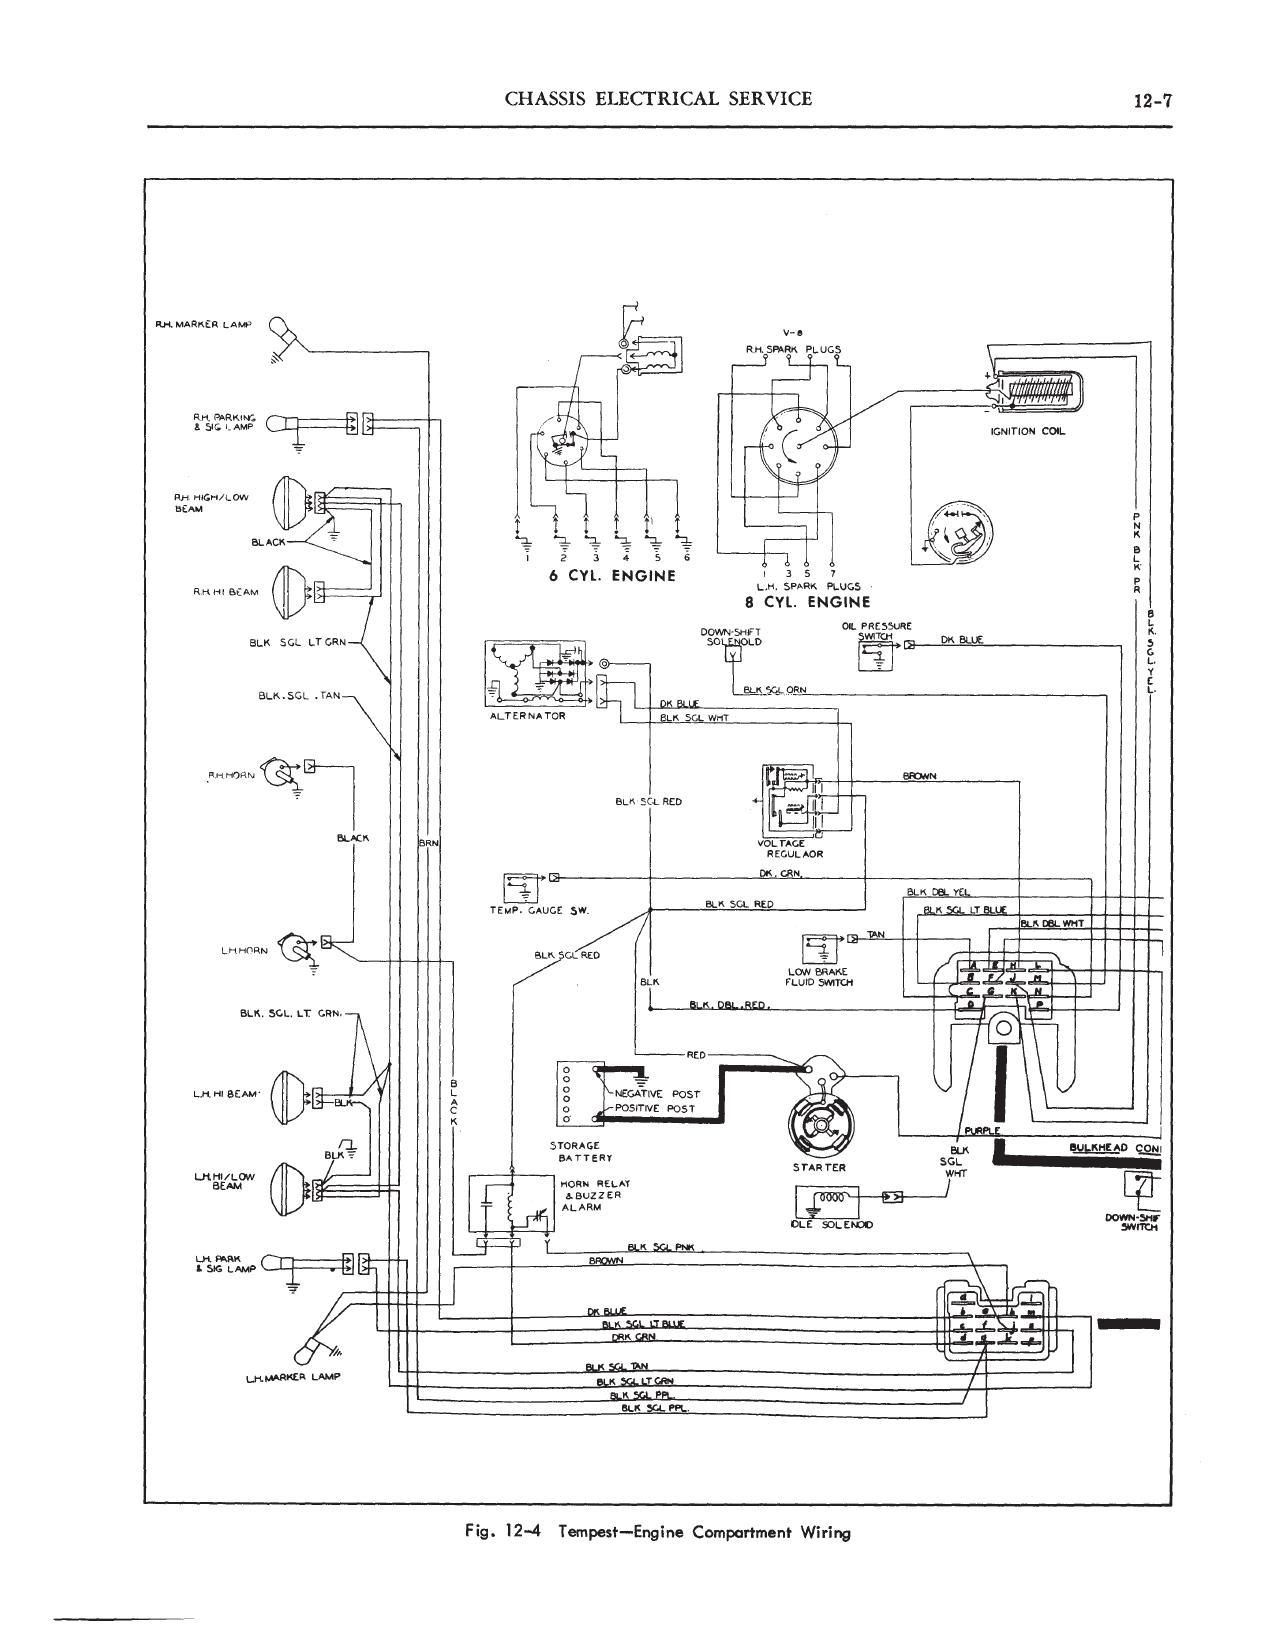 [DIAGRAM] 1966 Pontiac Lemans Wiring Diagram - MYDIAGRAM.ONLINE